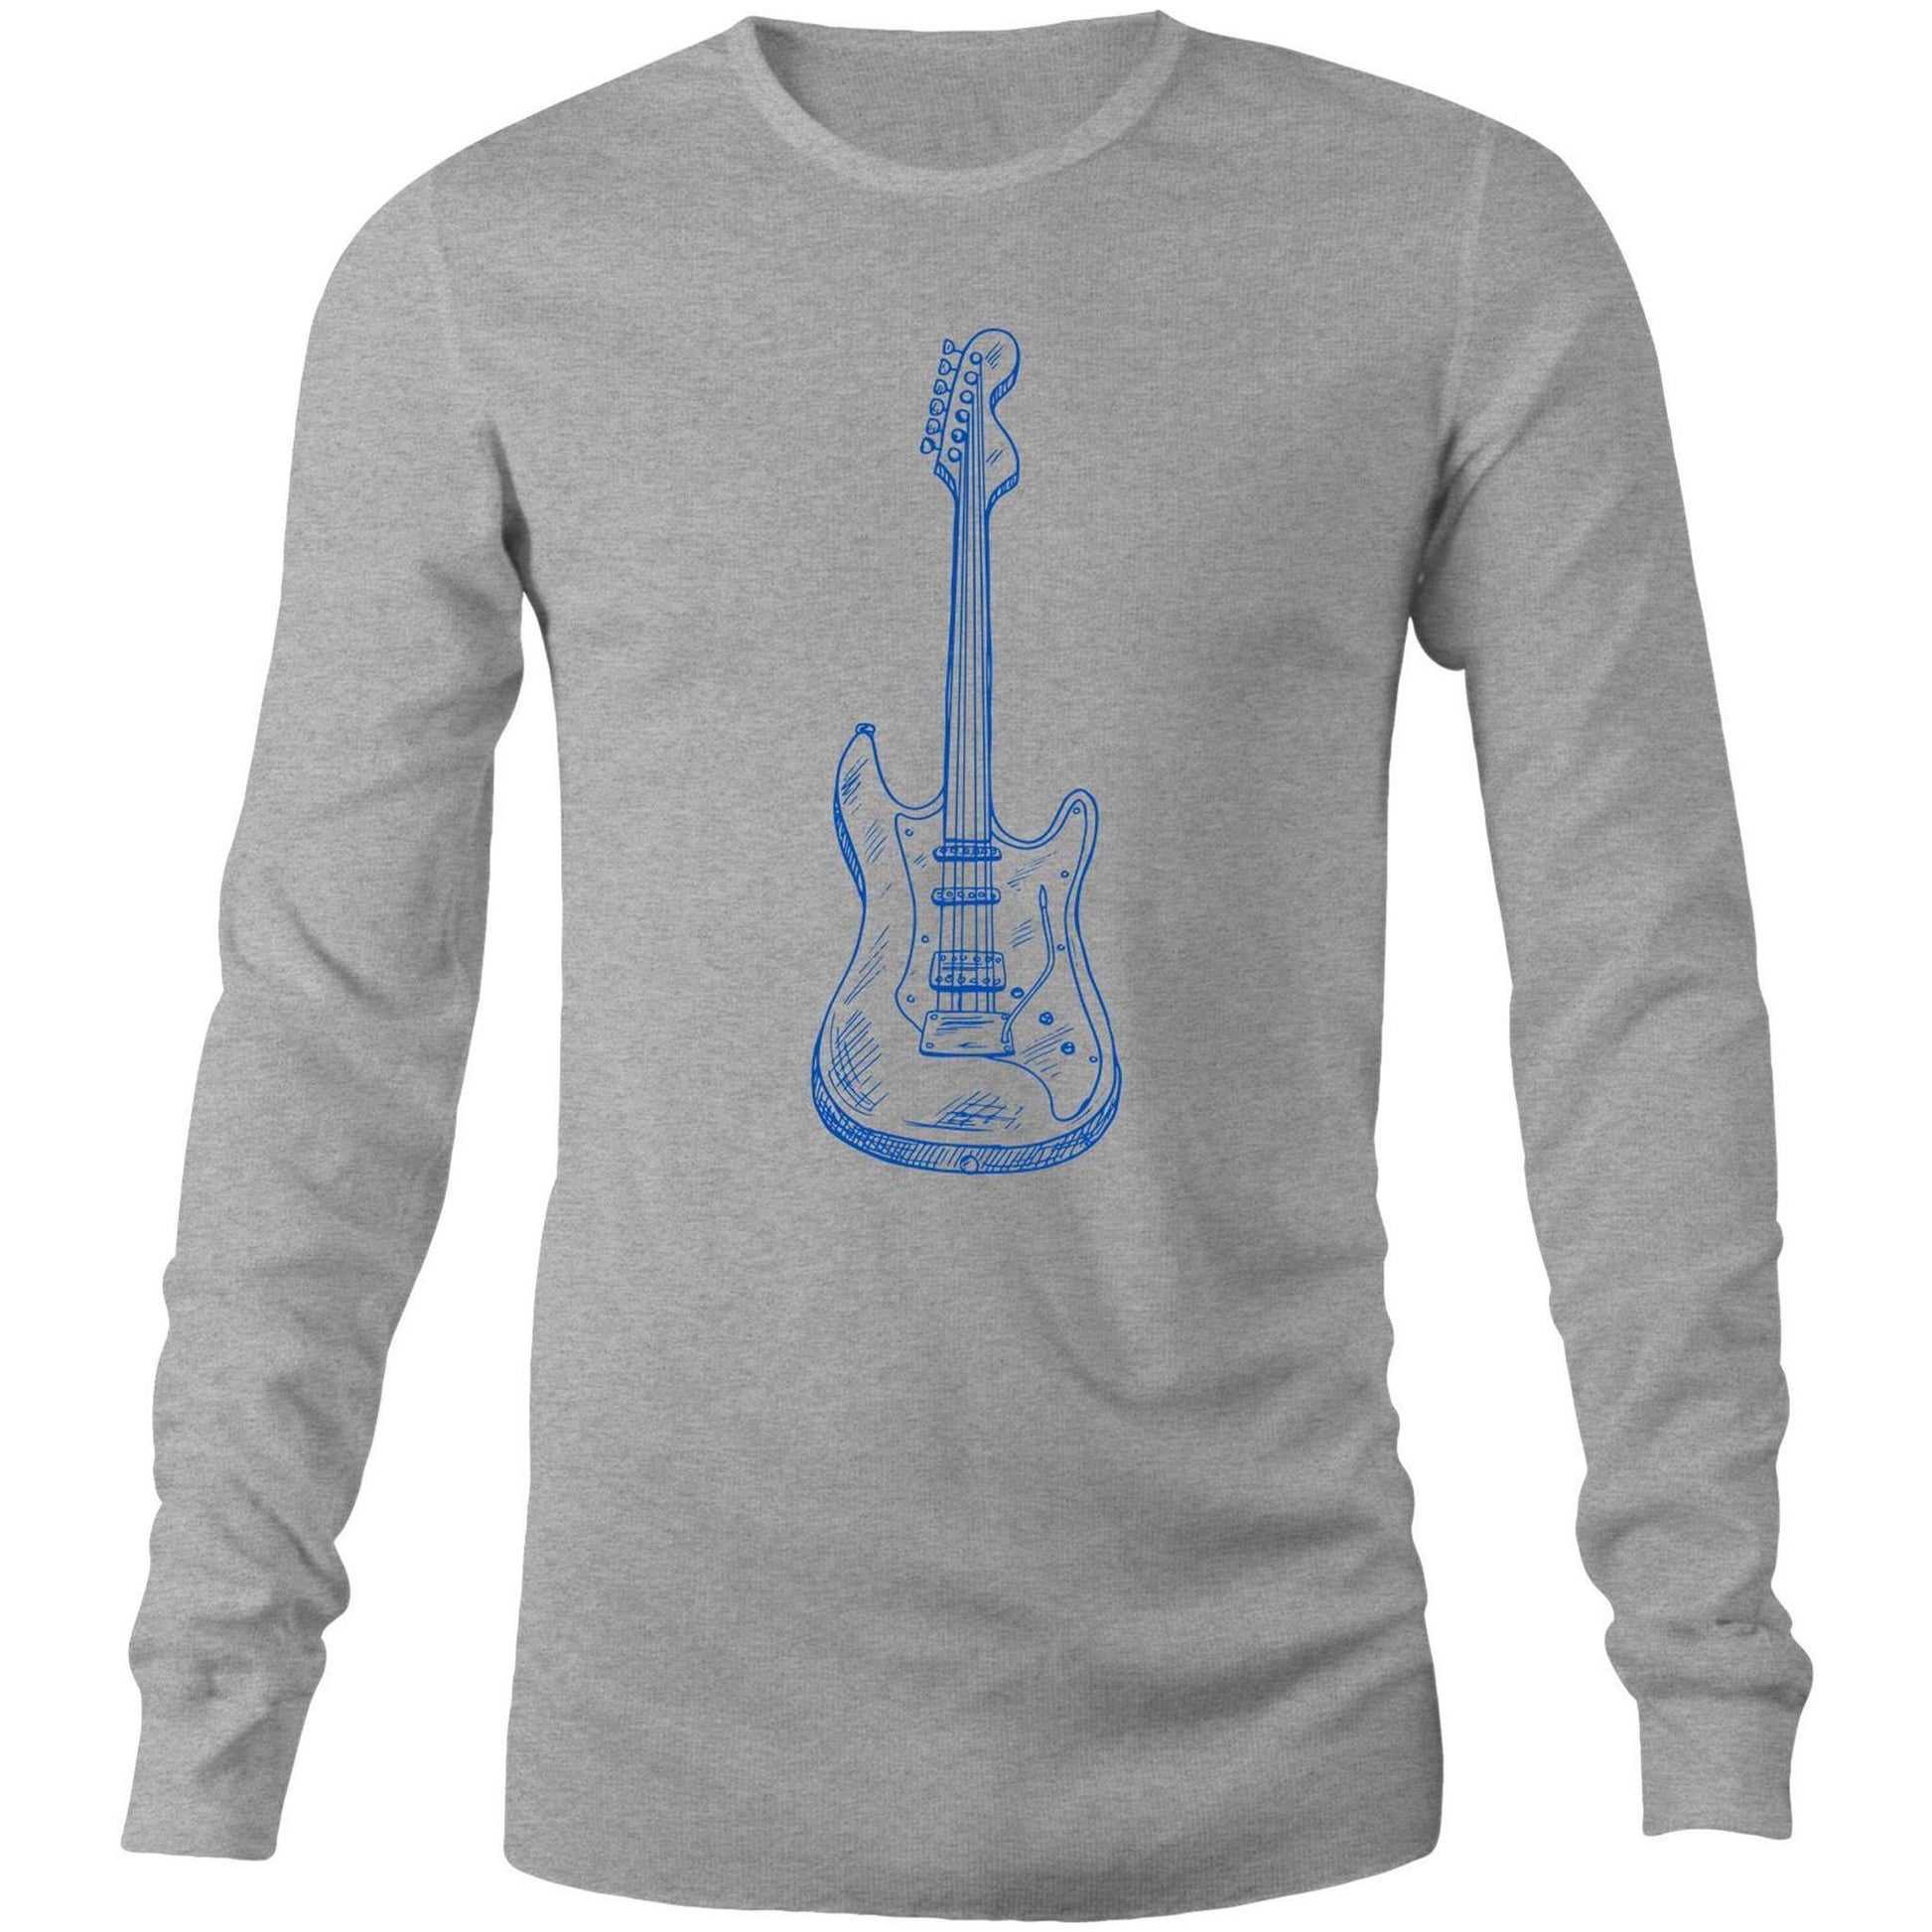 Guitar - Long Sleeve T-Shirt Grey Marle Unisex Long Sleeve T-shirt Mens Music Womens